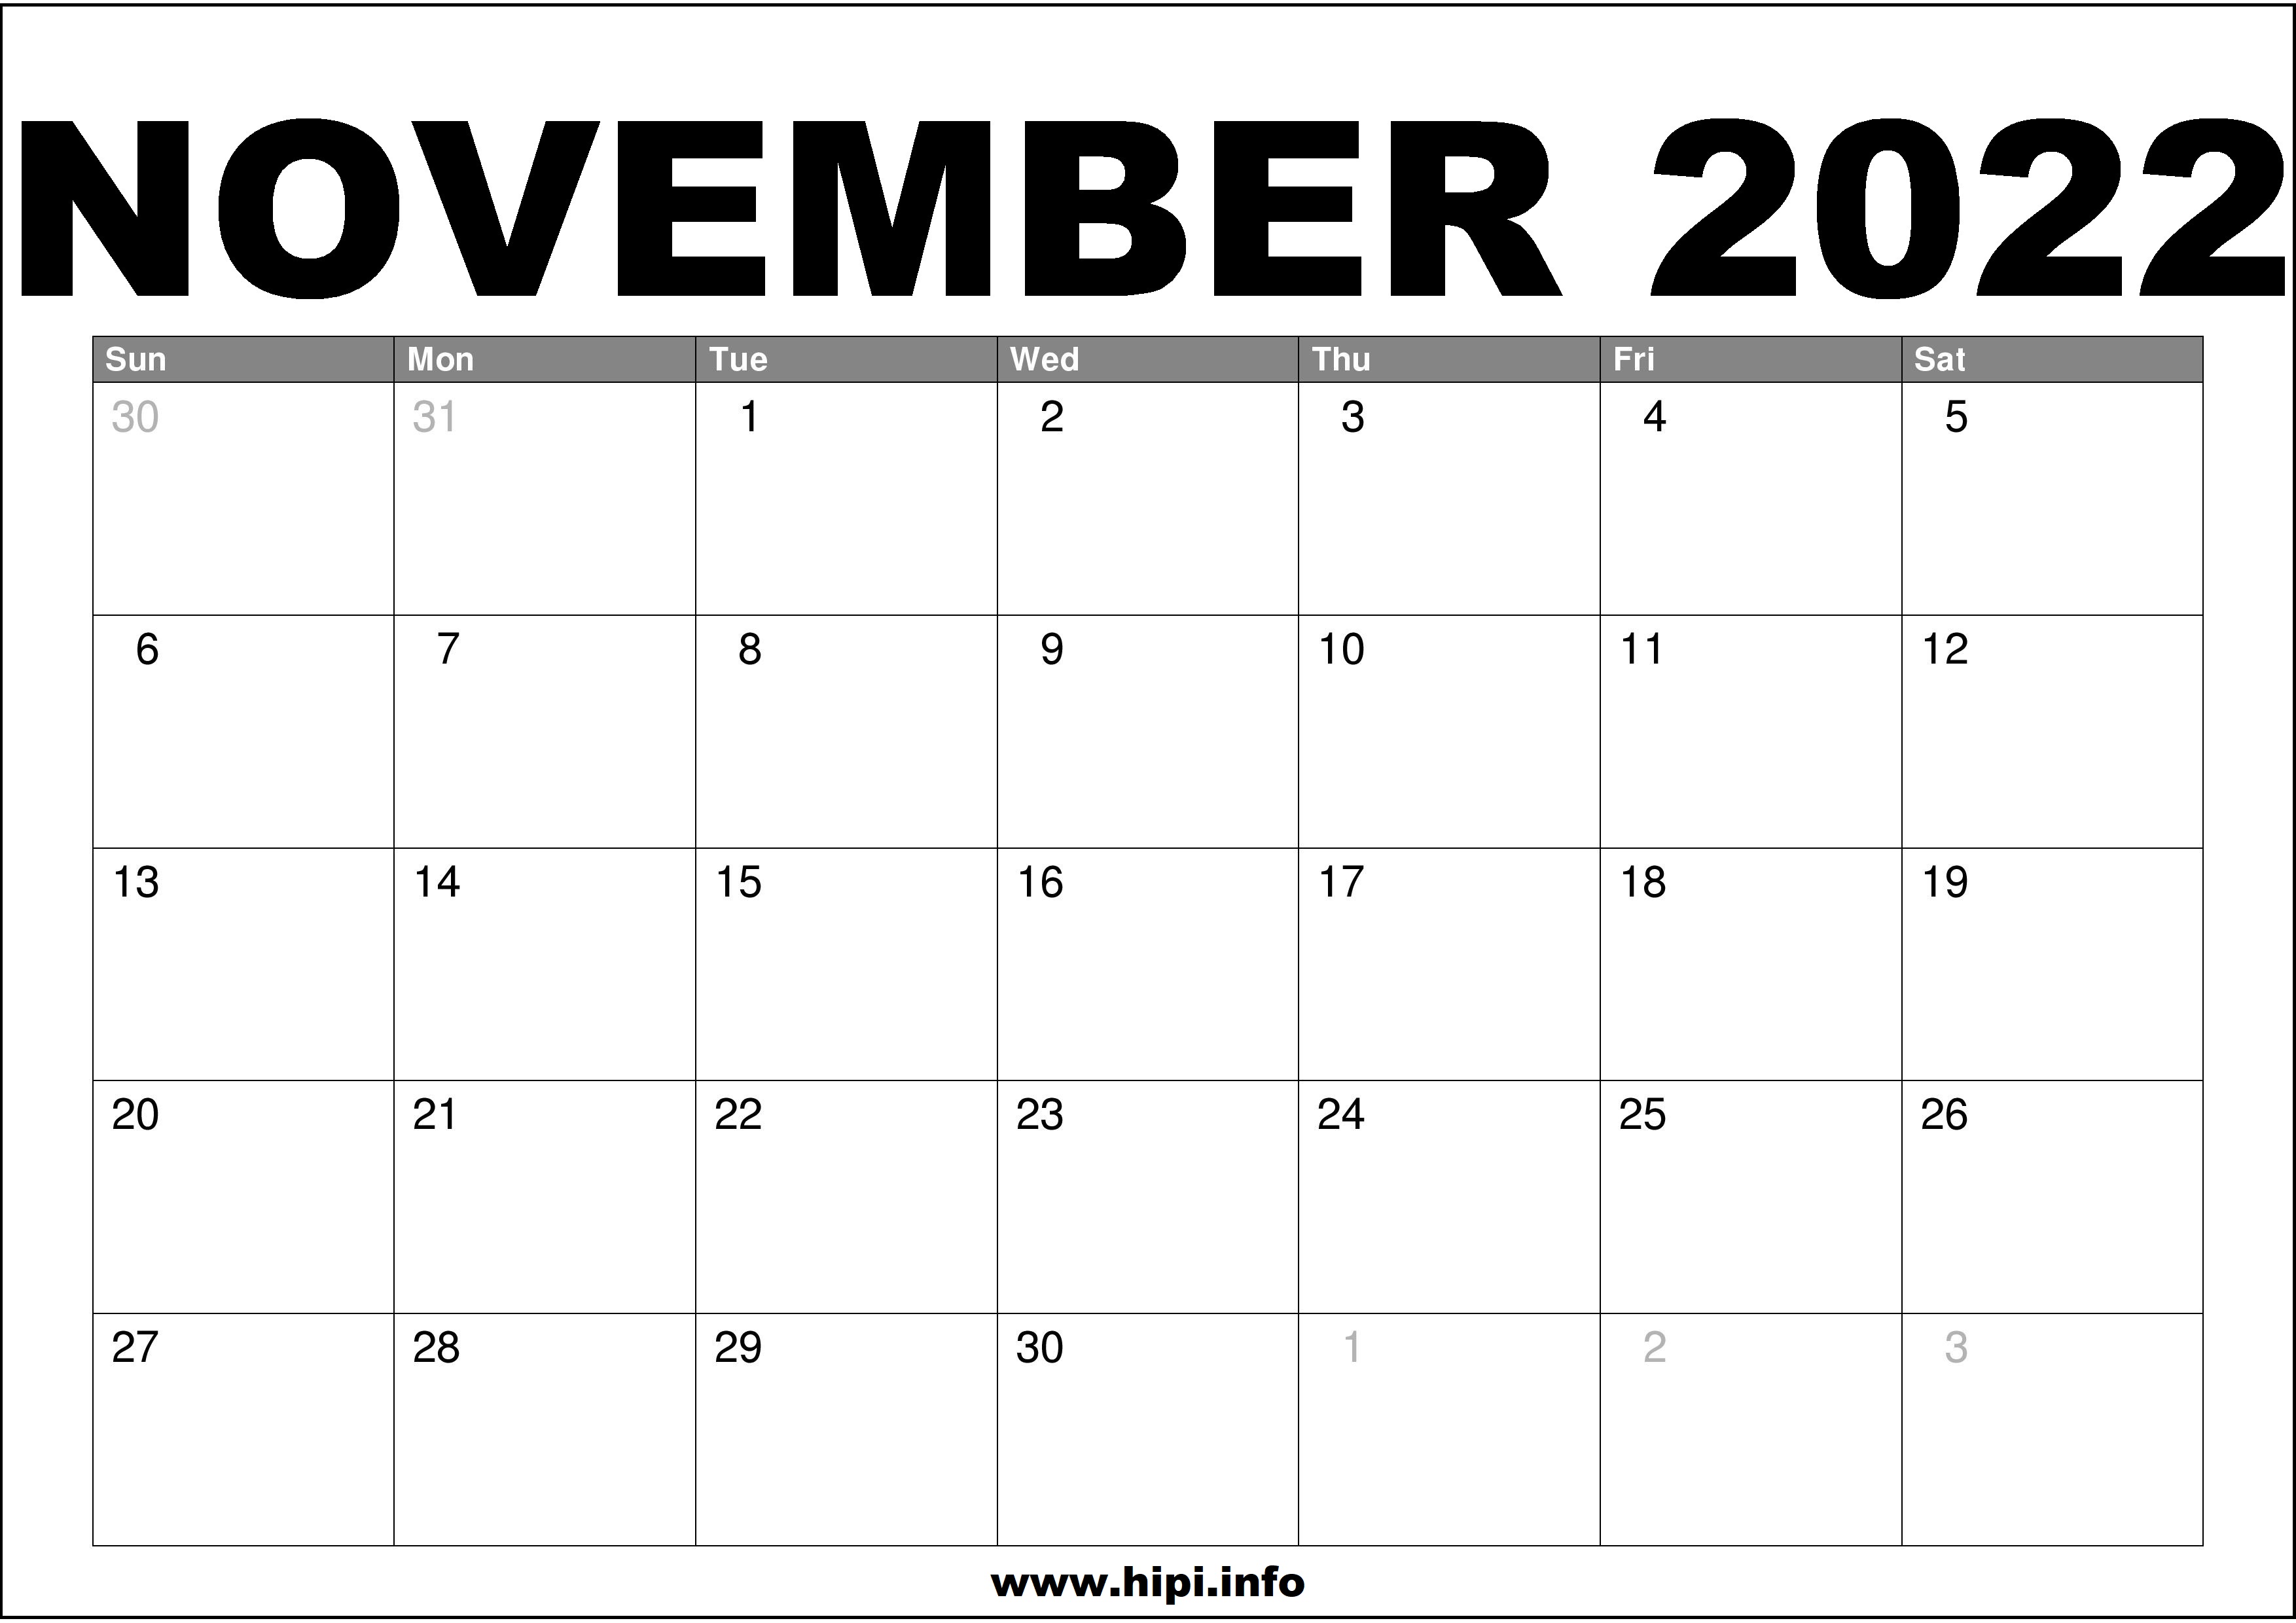 November 2022 Blank Calendar November 2022 Calendar Printable Free - Hipi.info | Calendars Printable Free